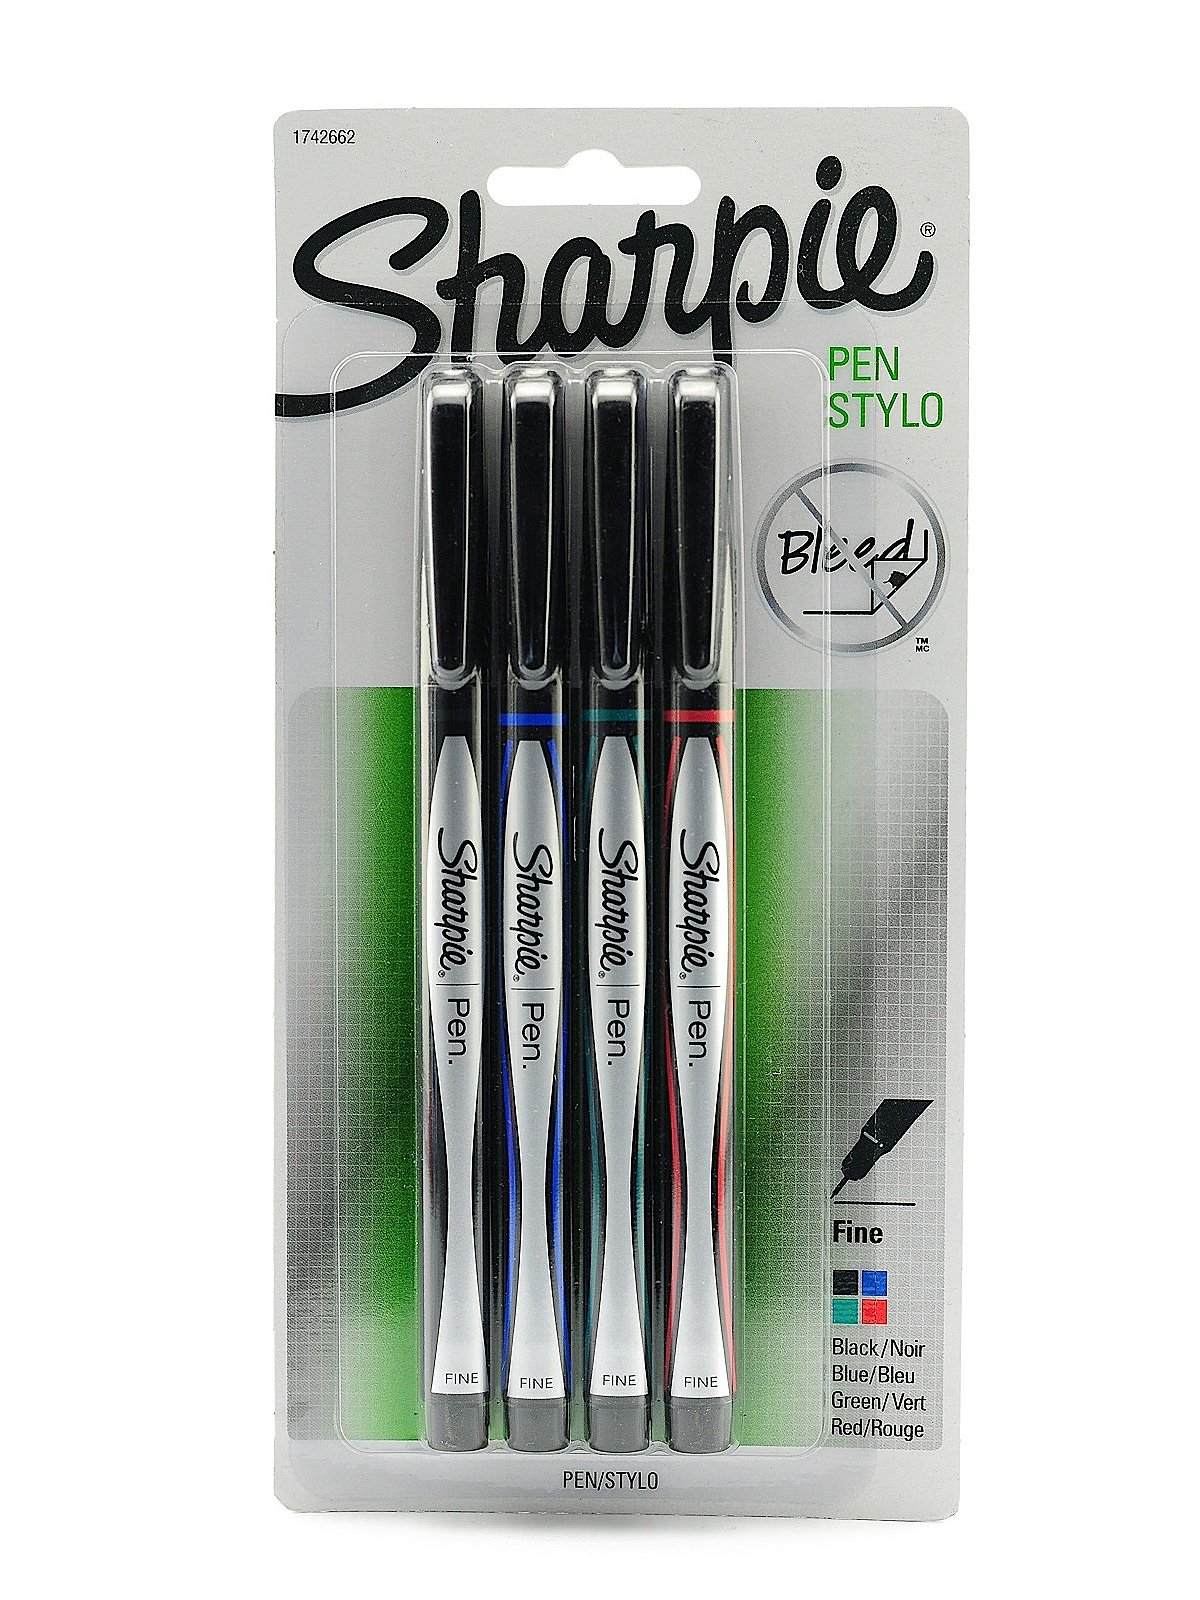 Sharpie Art Pen Sets